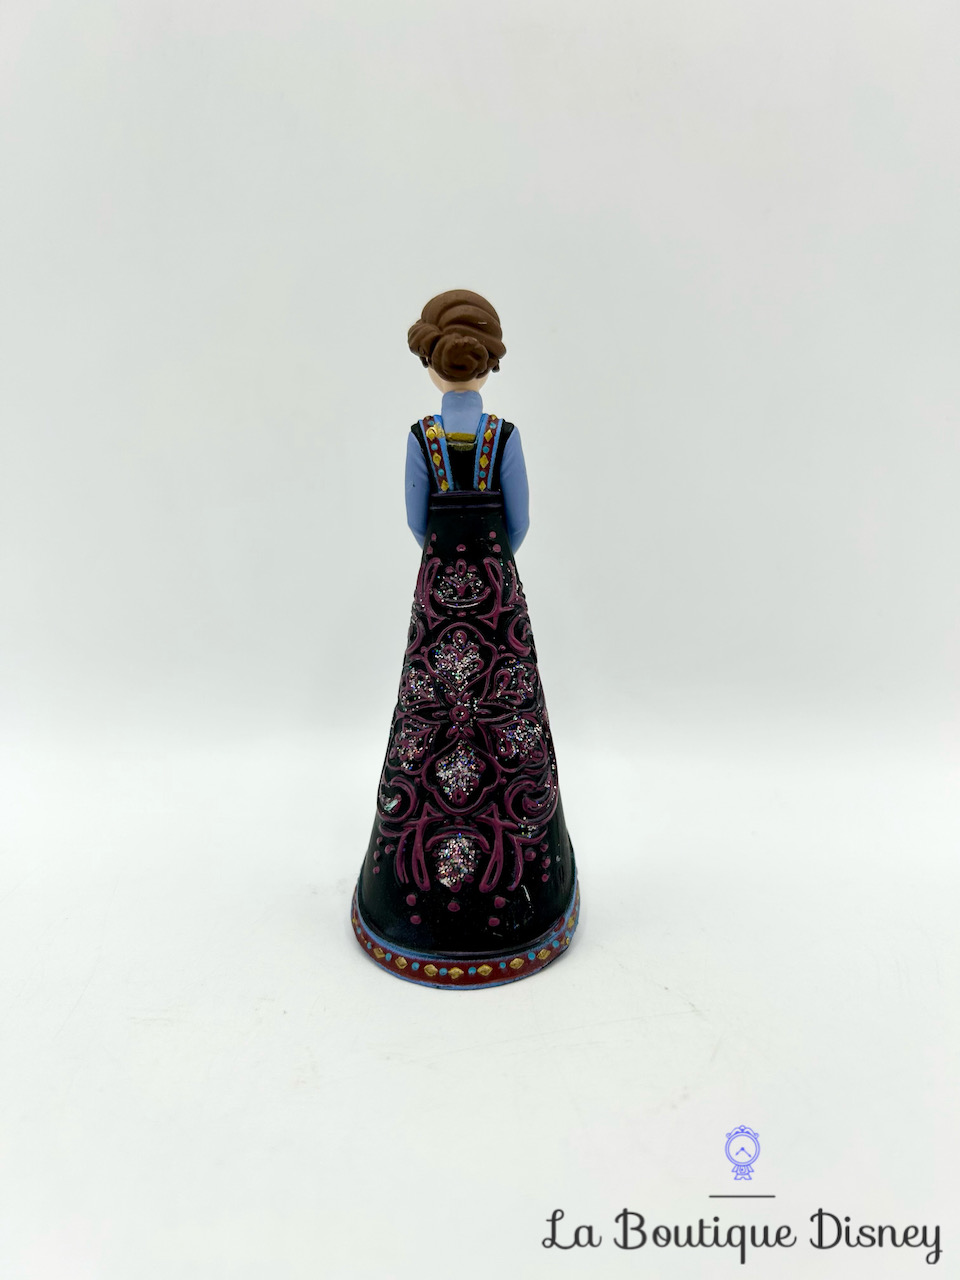 Figurine Reine Iduna Disney Store Playset La reine des neiges mère 9 cm